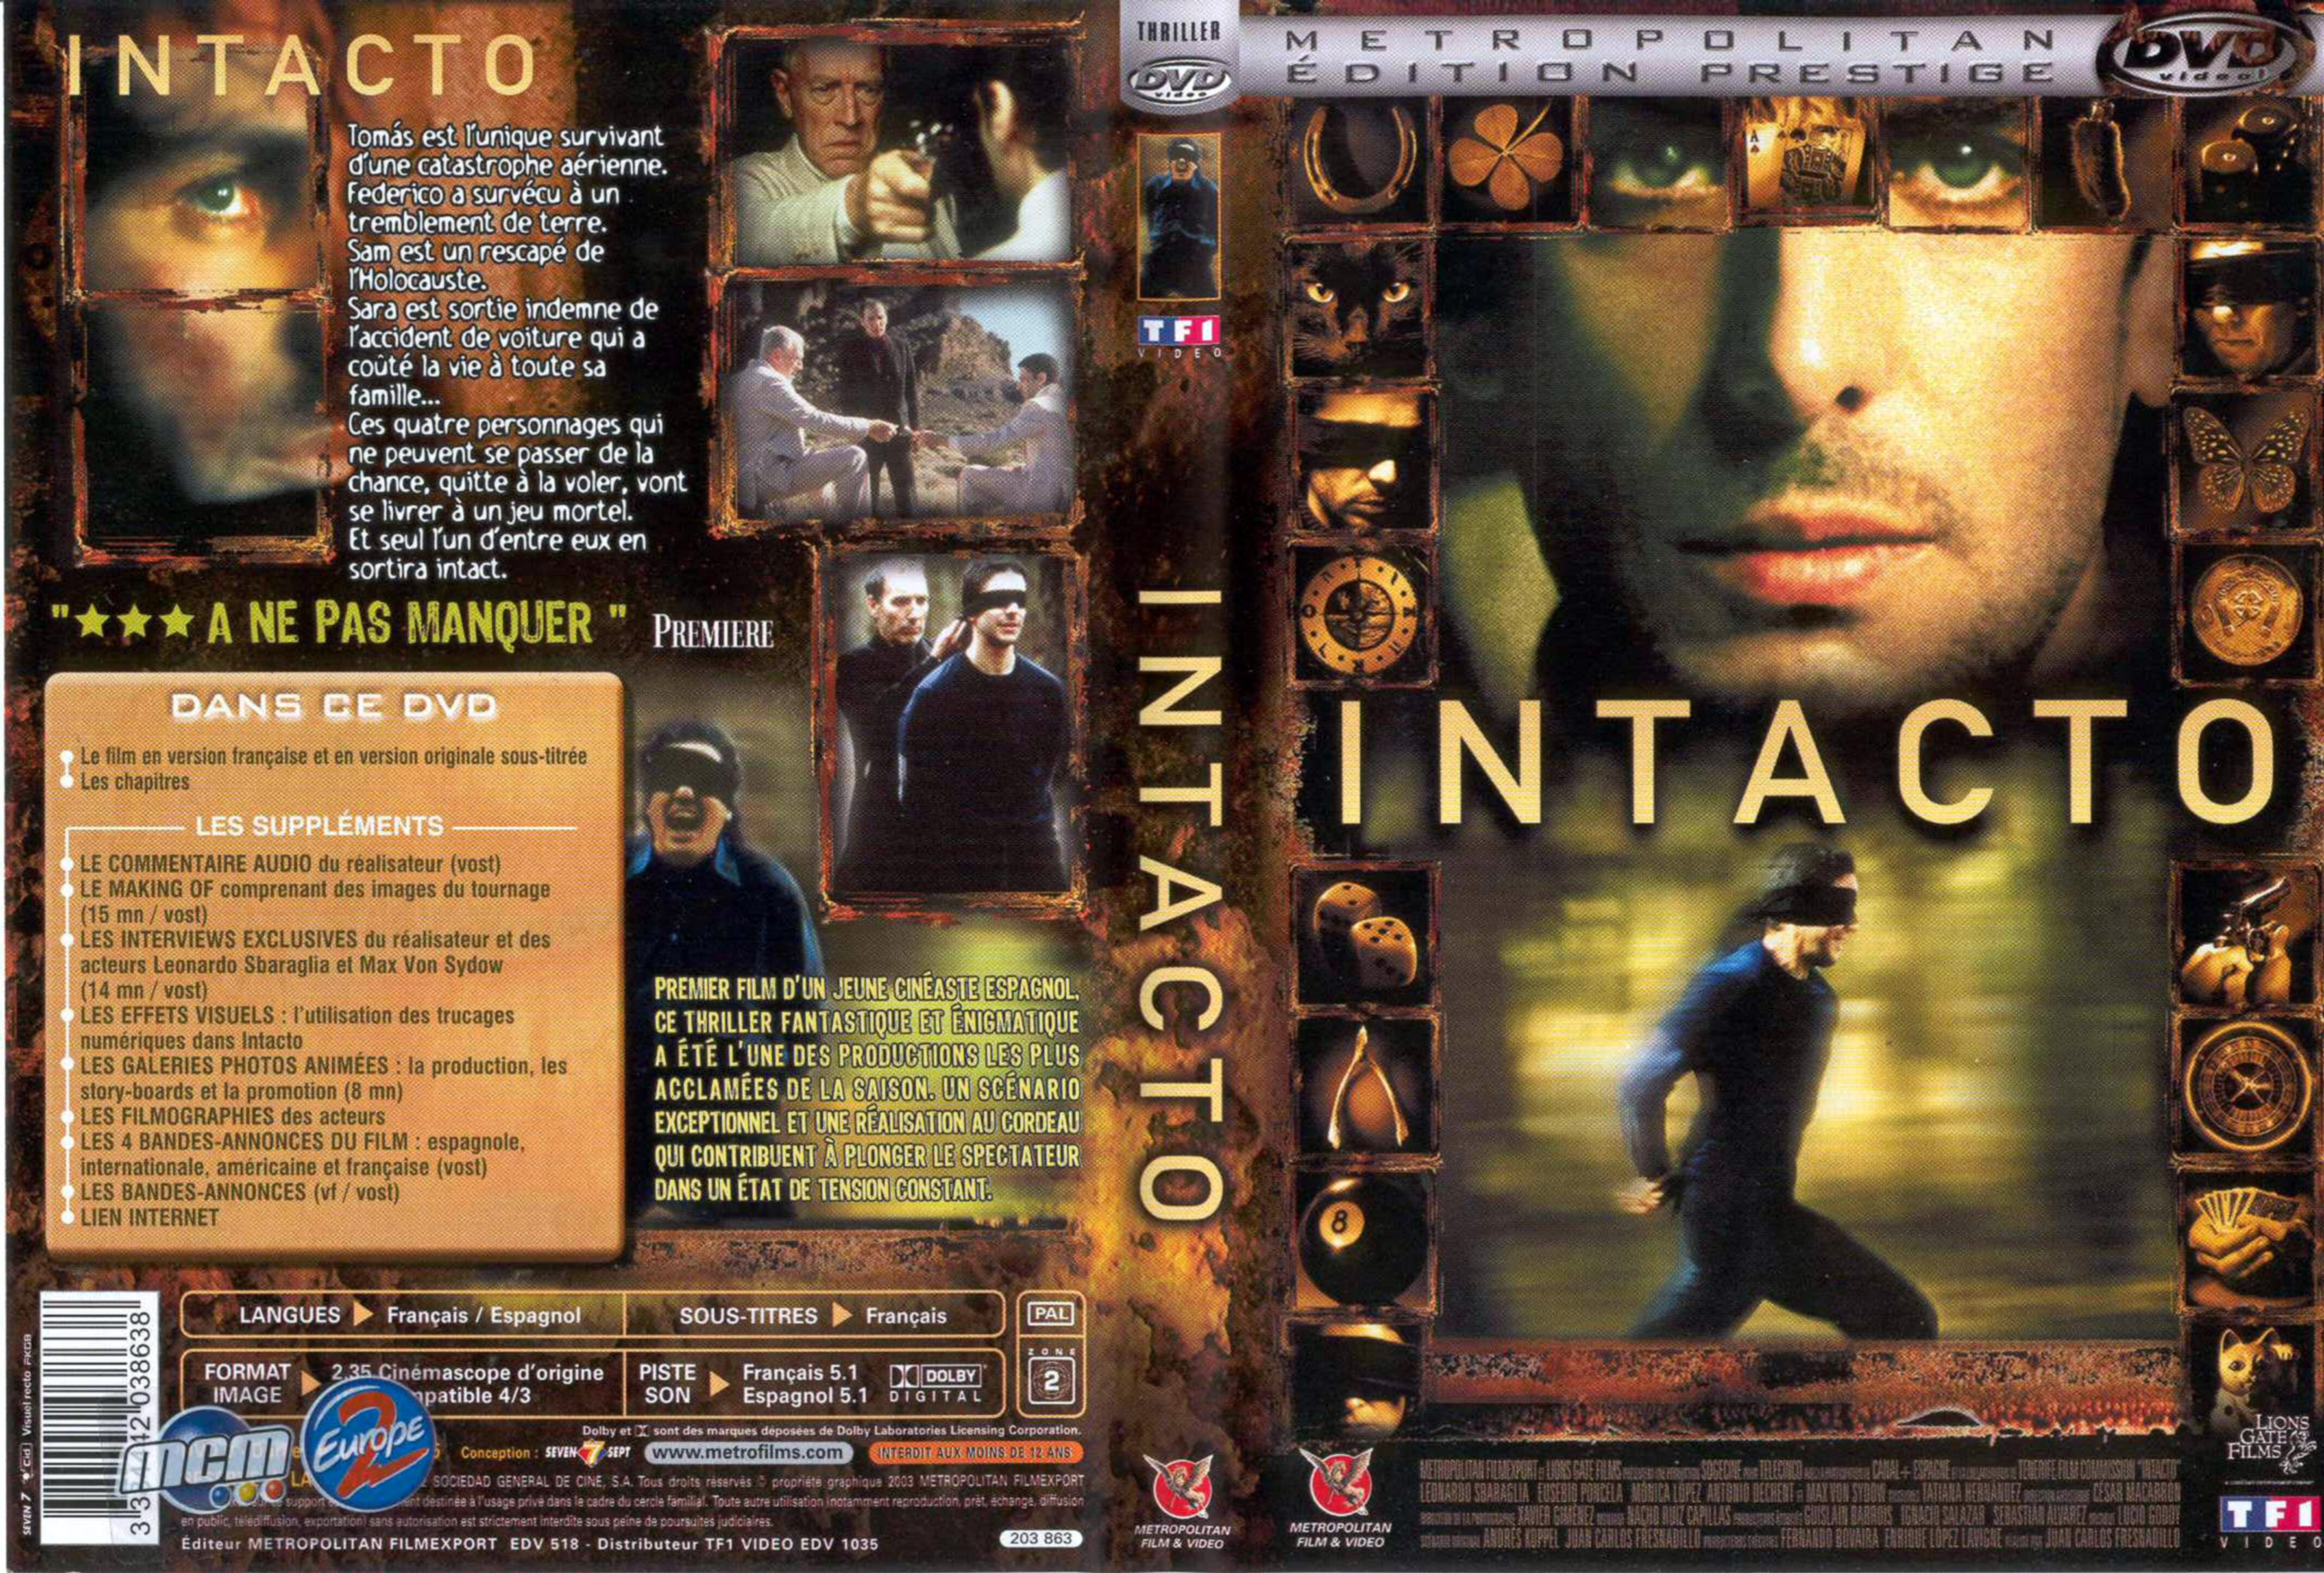 Jaquette DVD Intacto v2